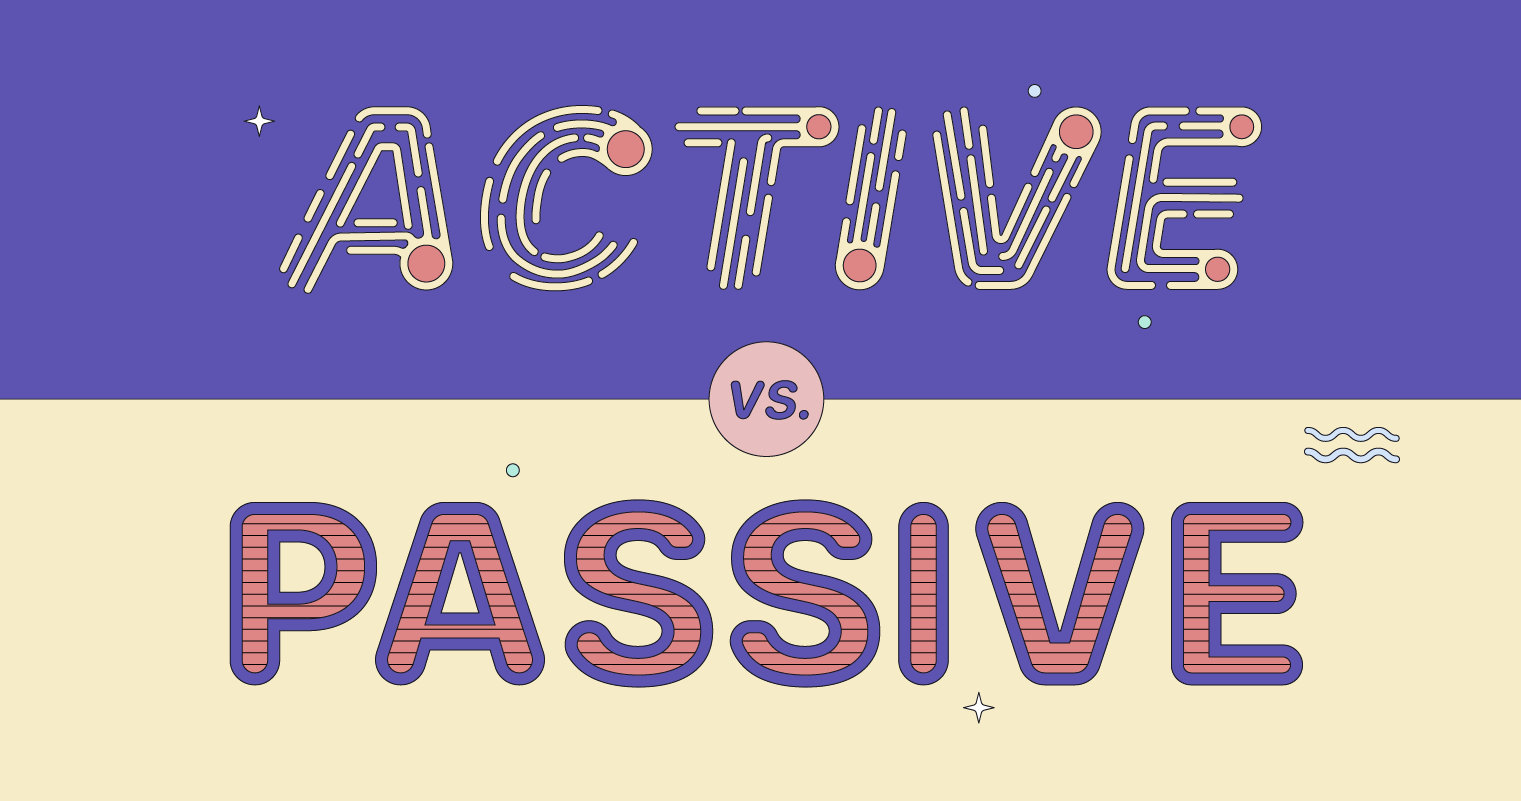 Active and Passive Voice Flashcards - Quizizz